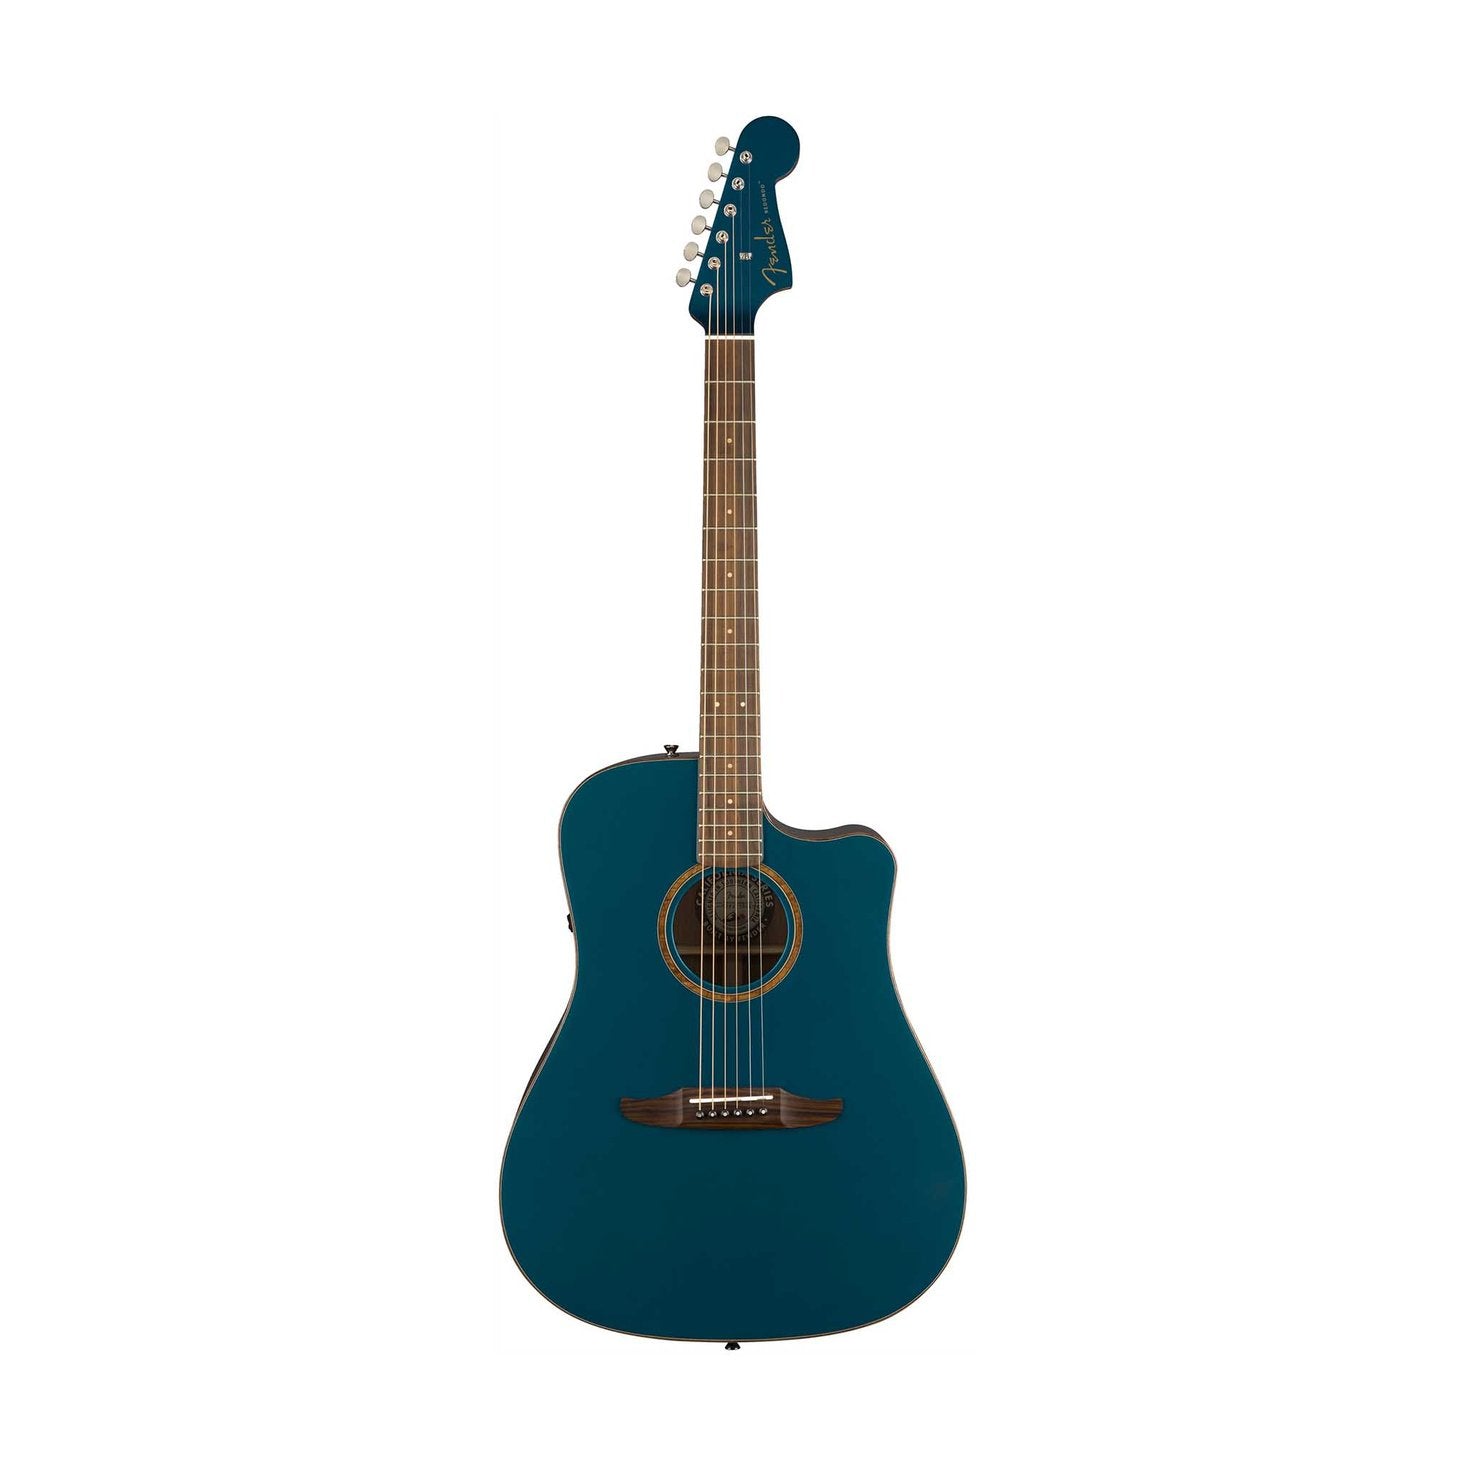 Fender Redondo Classic Slope-Shouldered Acoustic Guitar w/Bag, Cosmic Turquoise, FENDER, ACOUSTIC GUITAR, fender-acoustic-guitar-f03-097-0913-299, ZOSO MUSIC SDN BHD